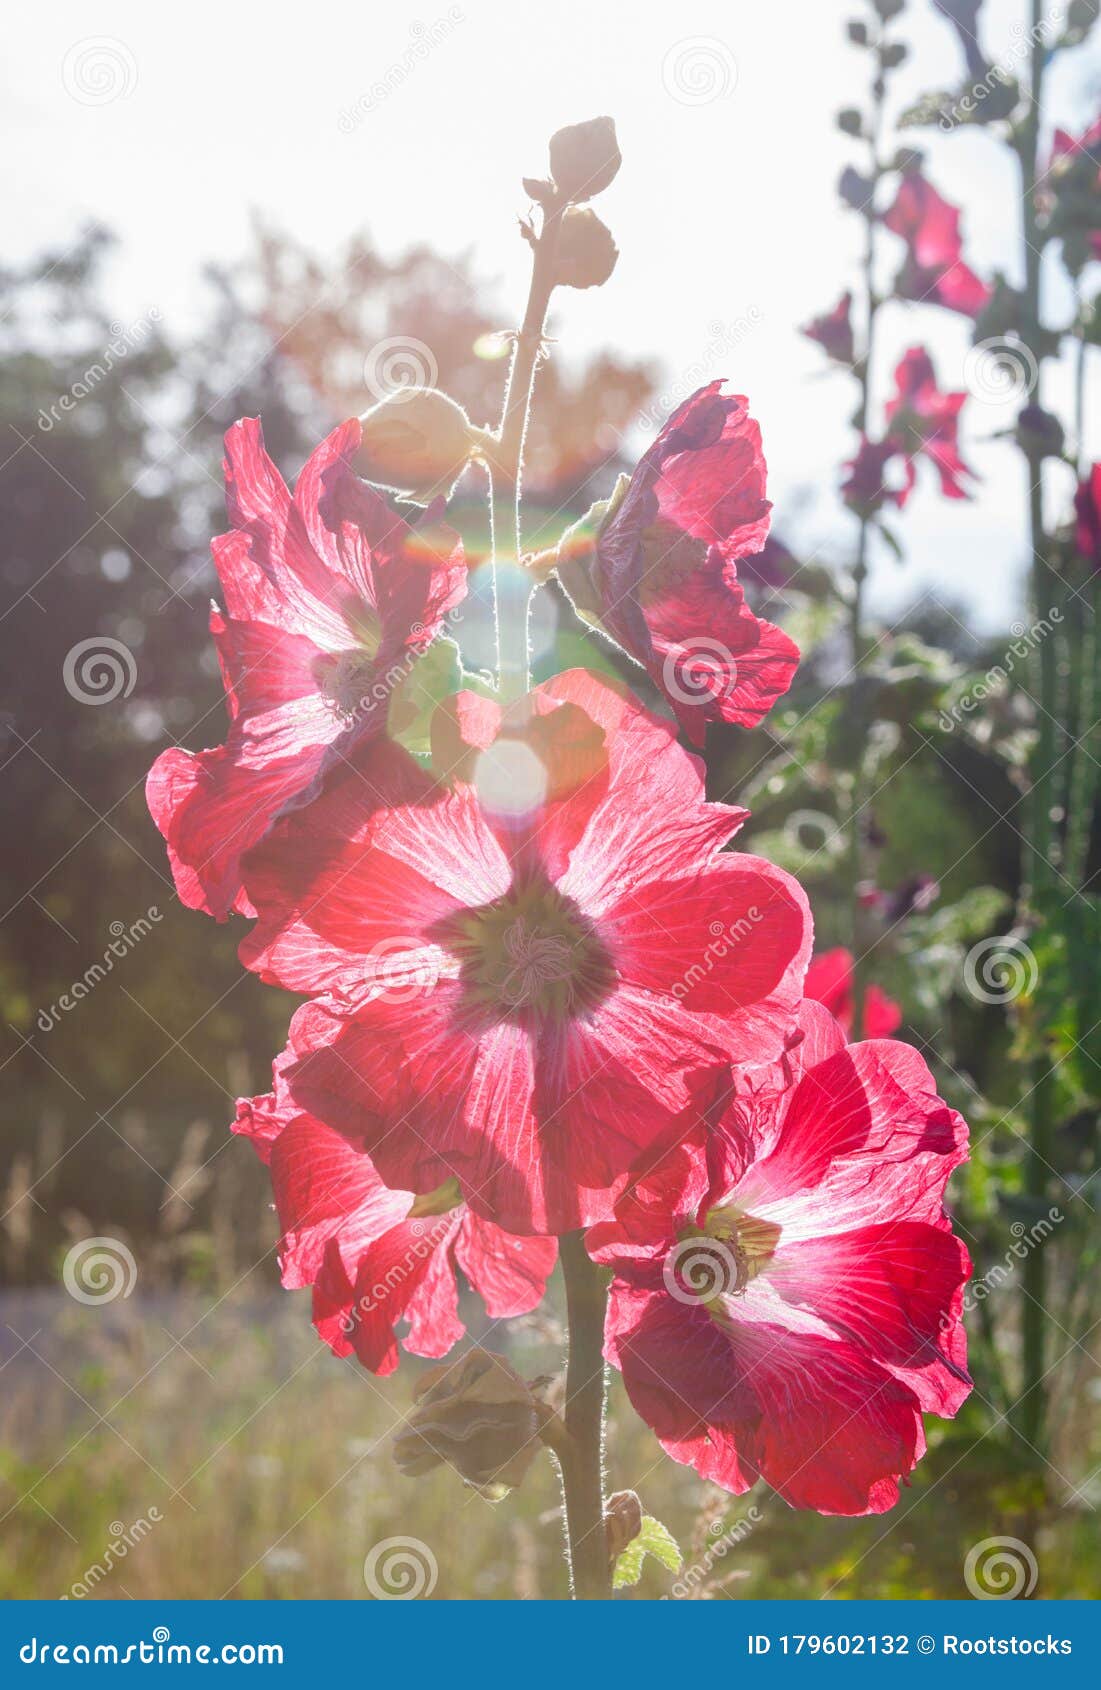 Flores de malva rosa foto de archivo. Imagen de flor - 179602132